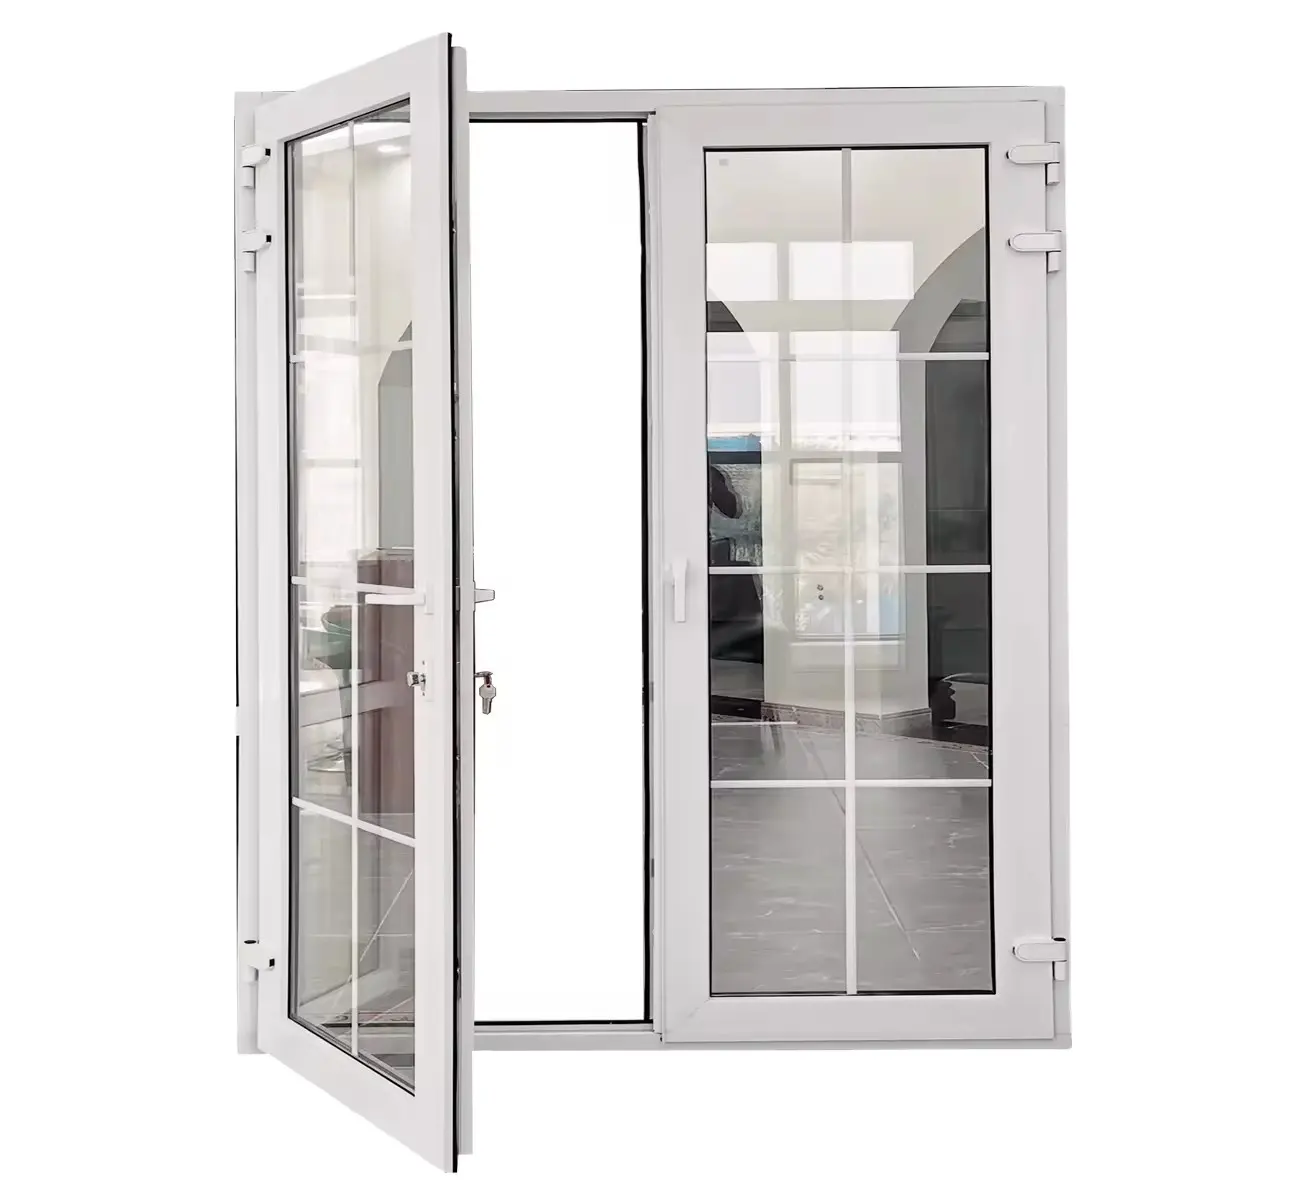 Gorden jendela PVC tahan cuaca, tirai eksterior lipat tahan suara, layar magnetik buka Horizontal, pintu Casement PVC Modern